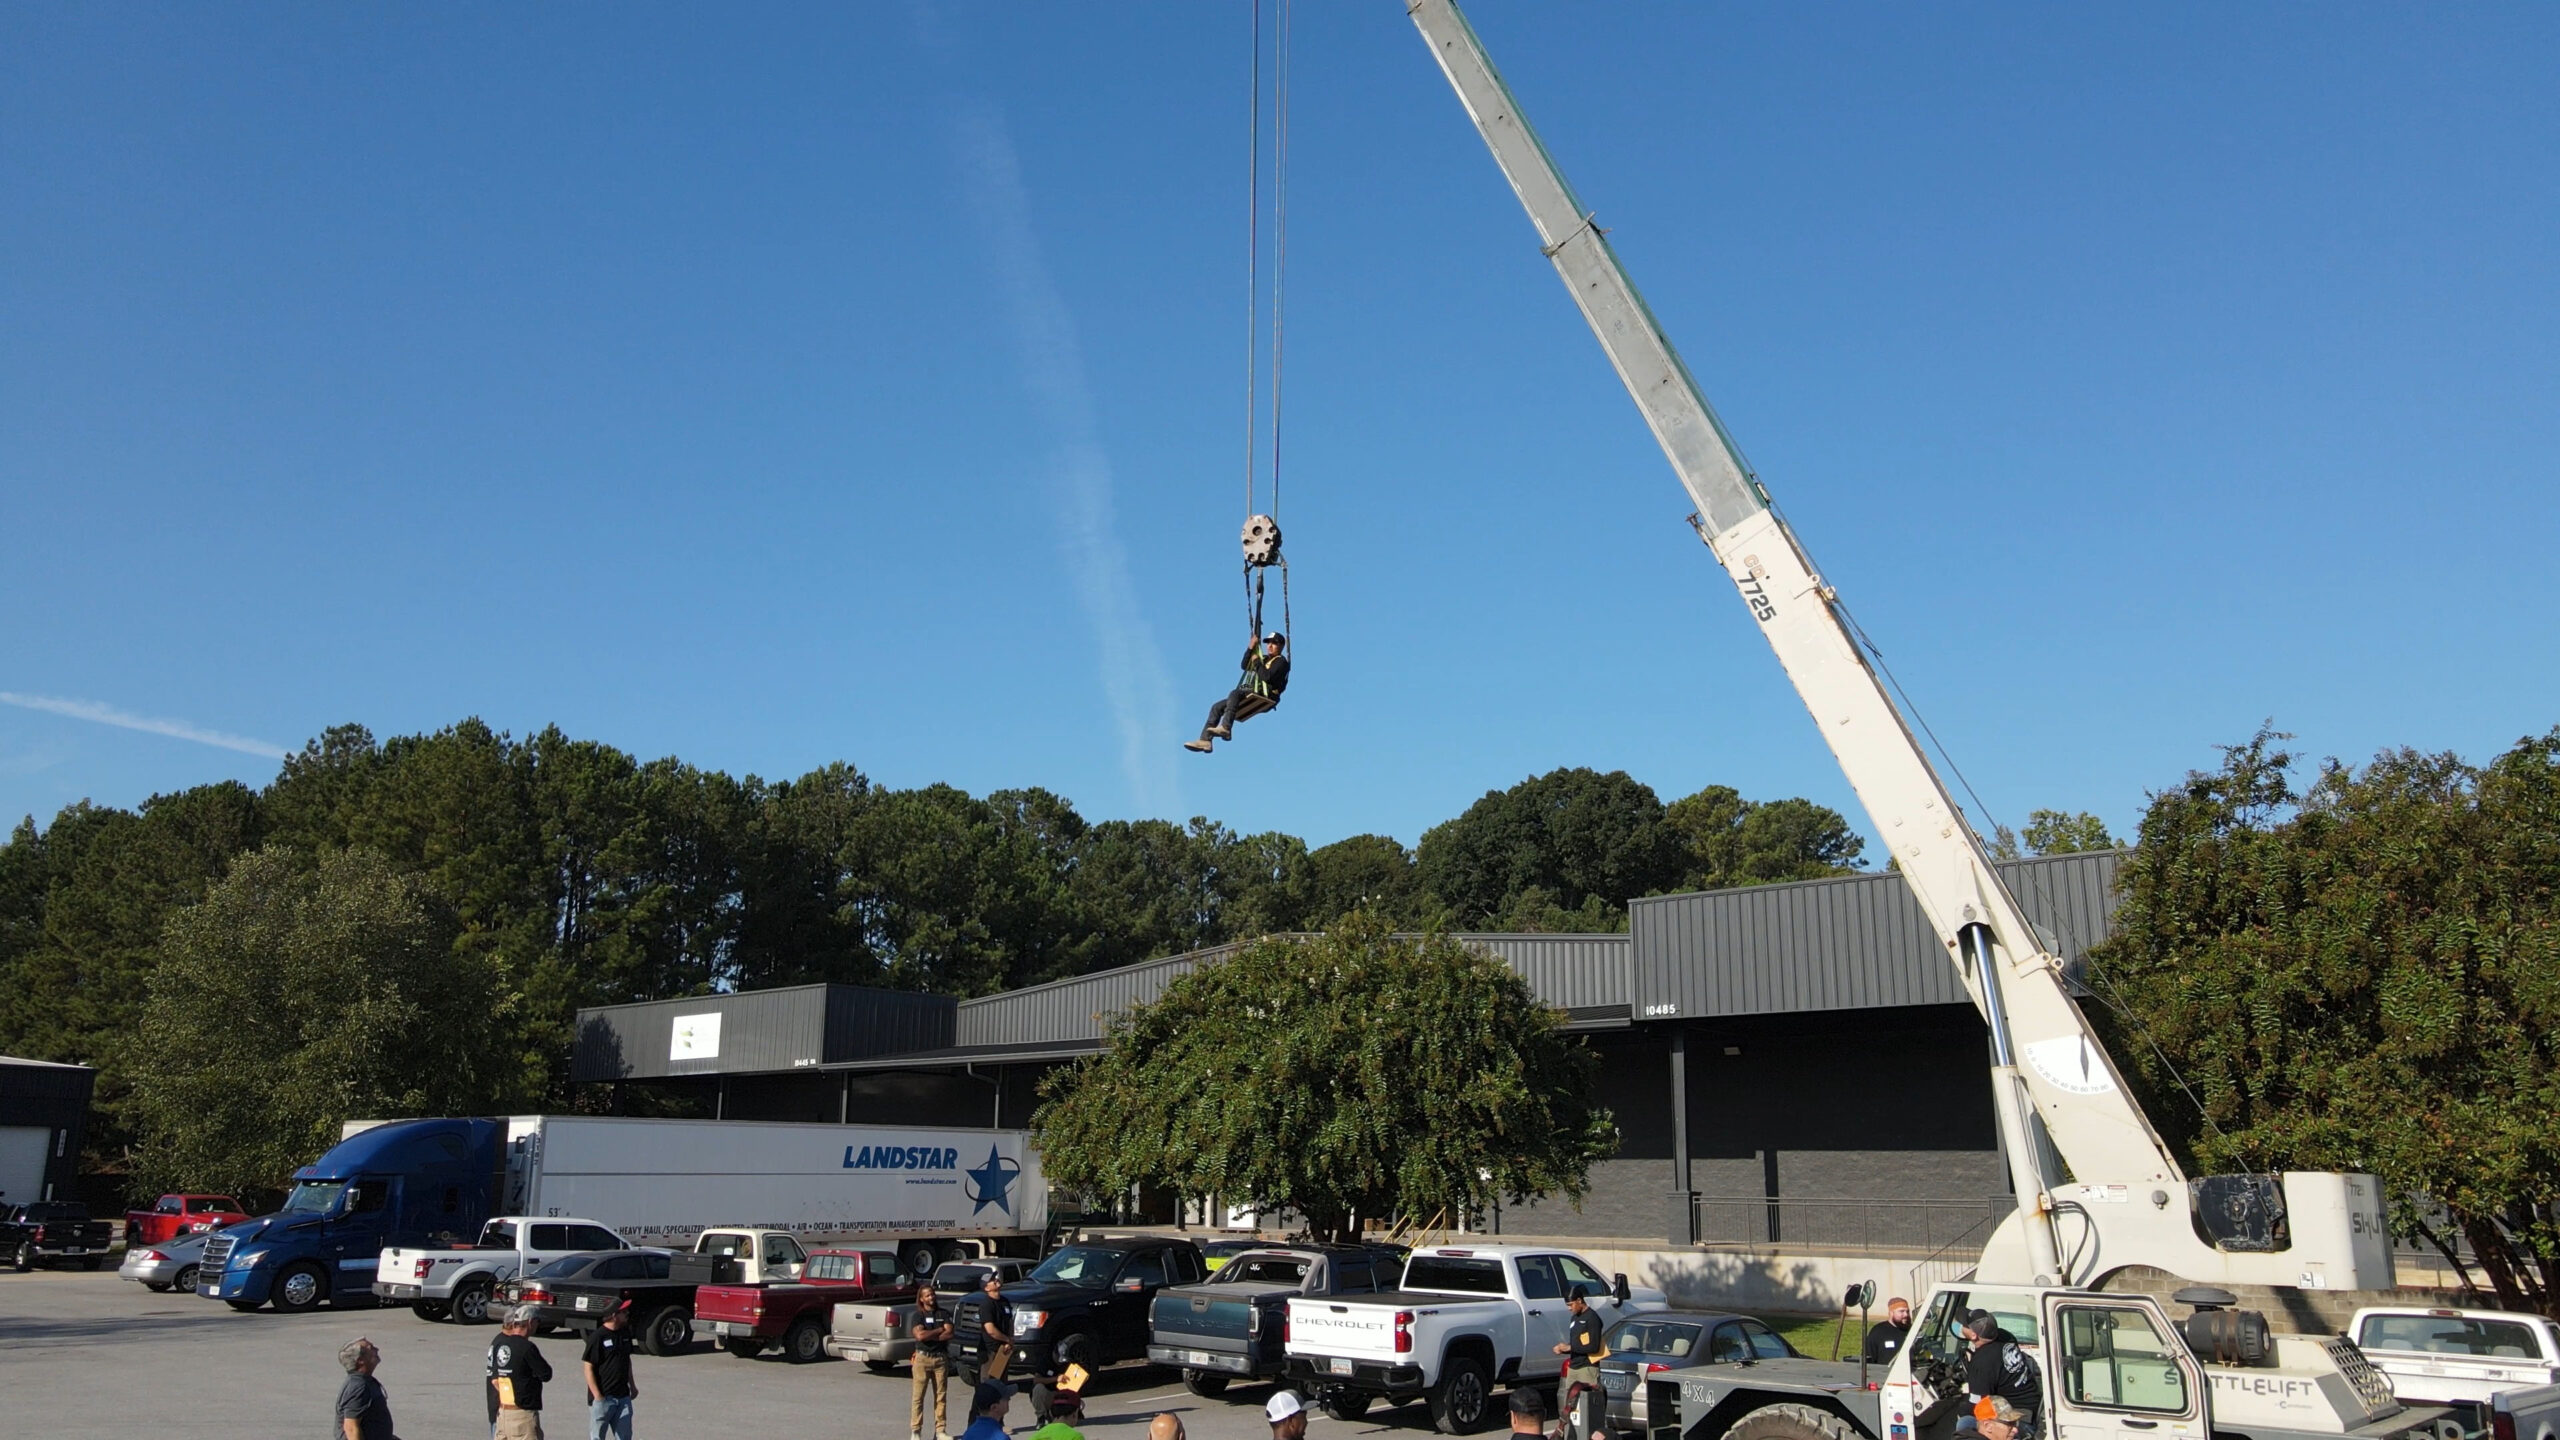 PEC team safety training with crane rigging